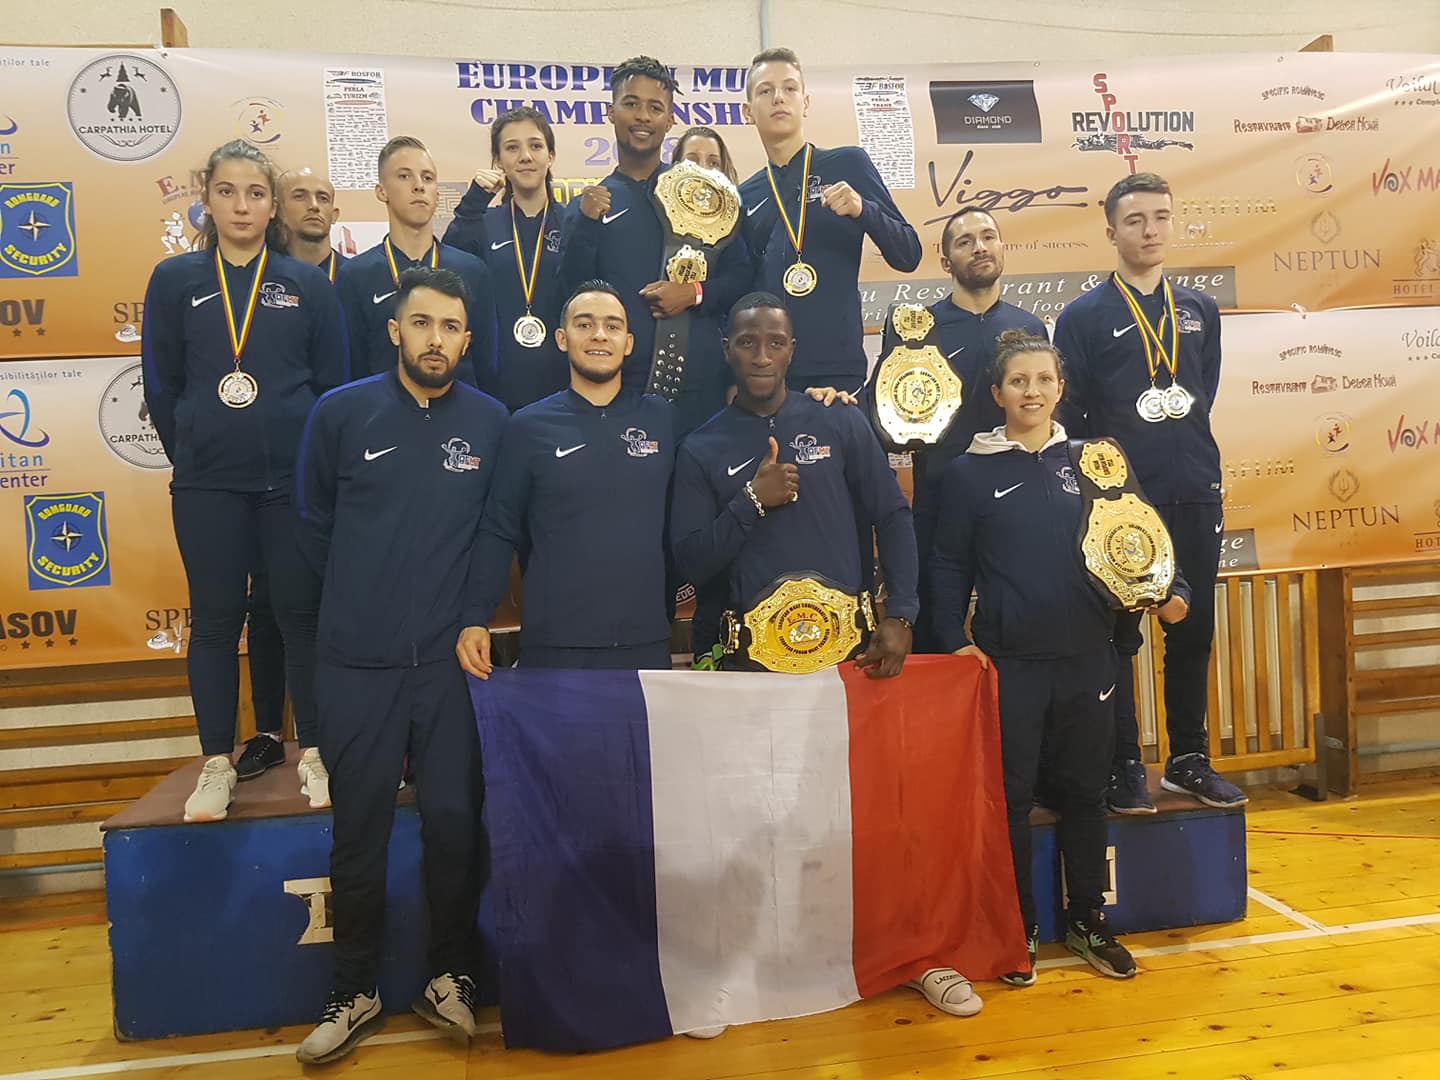 resultat equipe national afmt championnat europe 2018